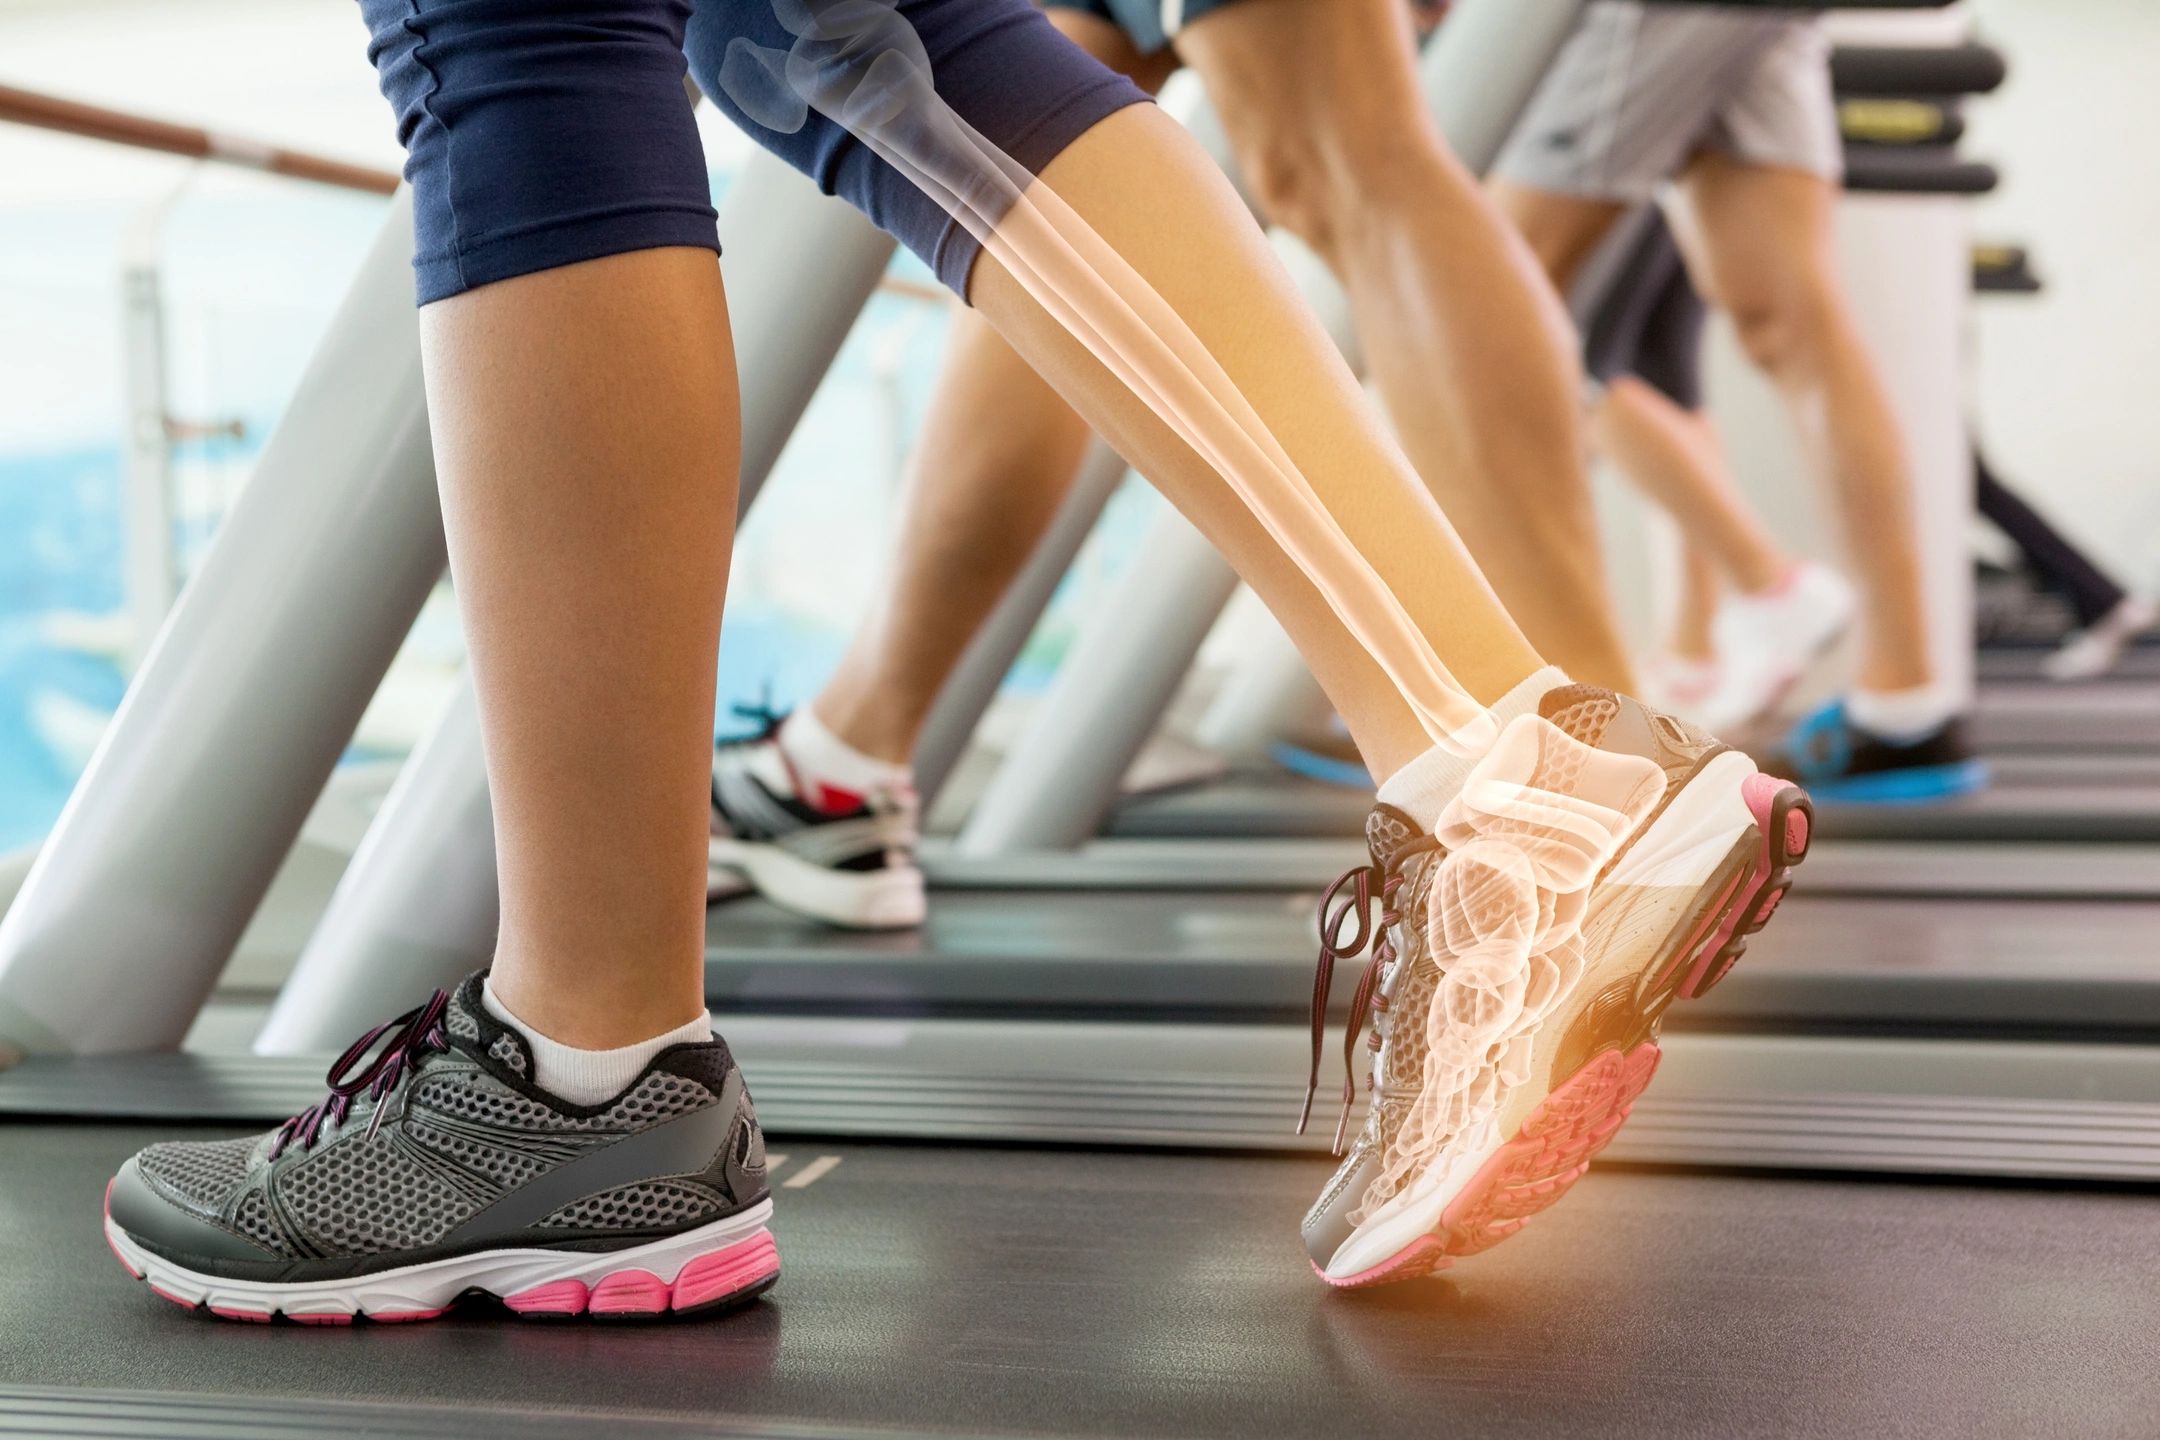 How do custom orthotics reduce foot pain and fatigue?